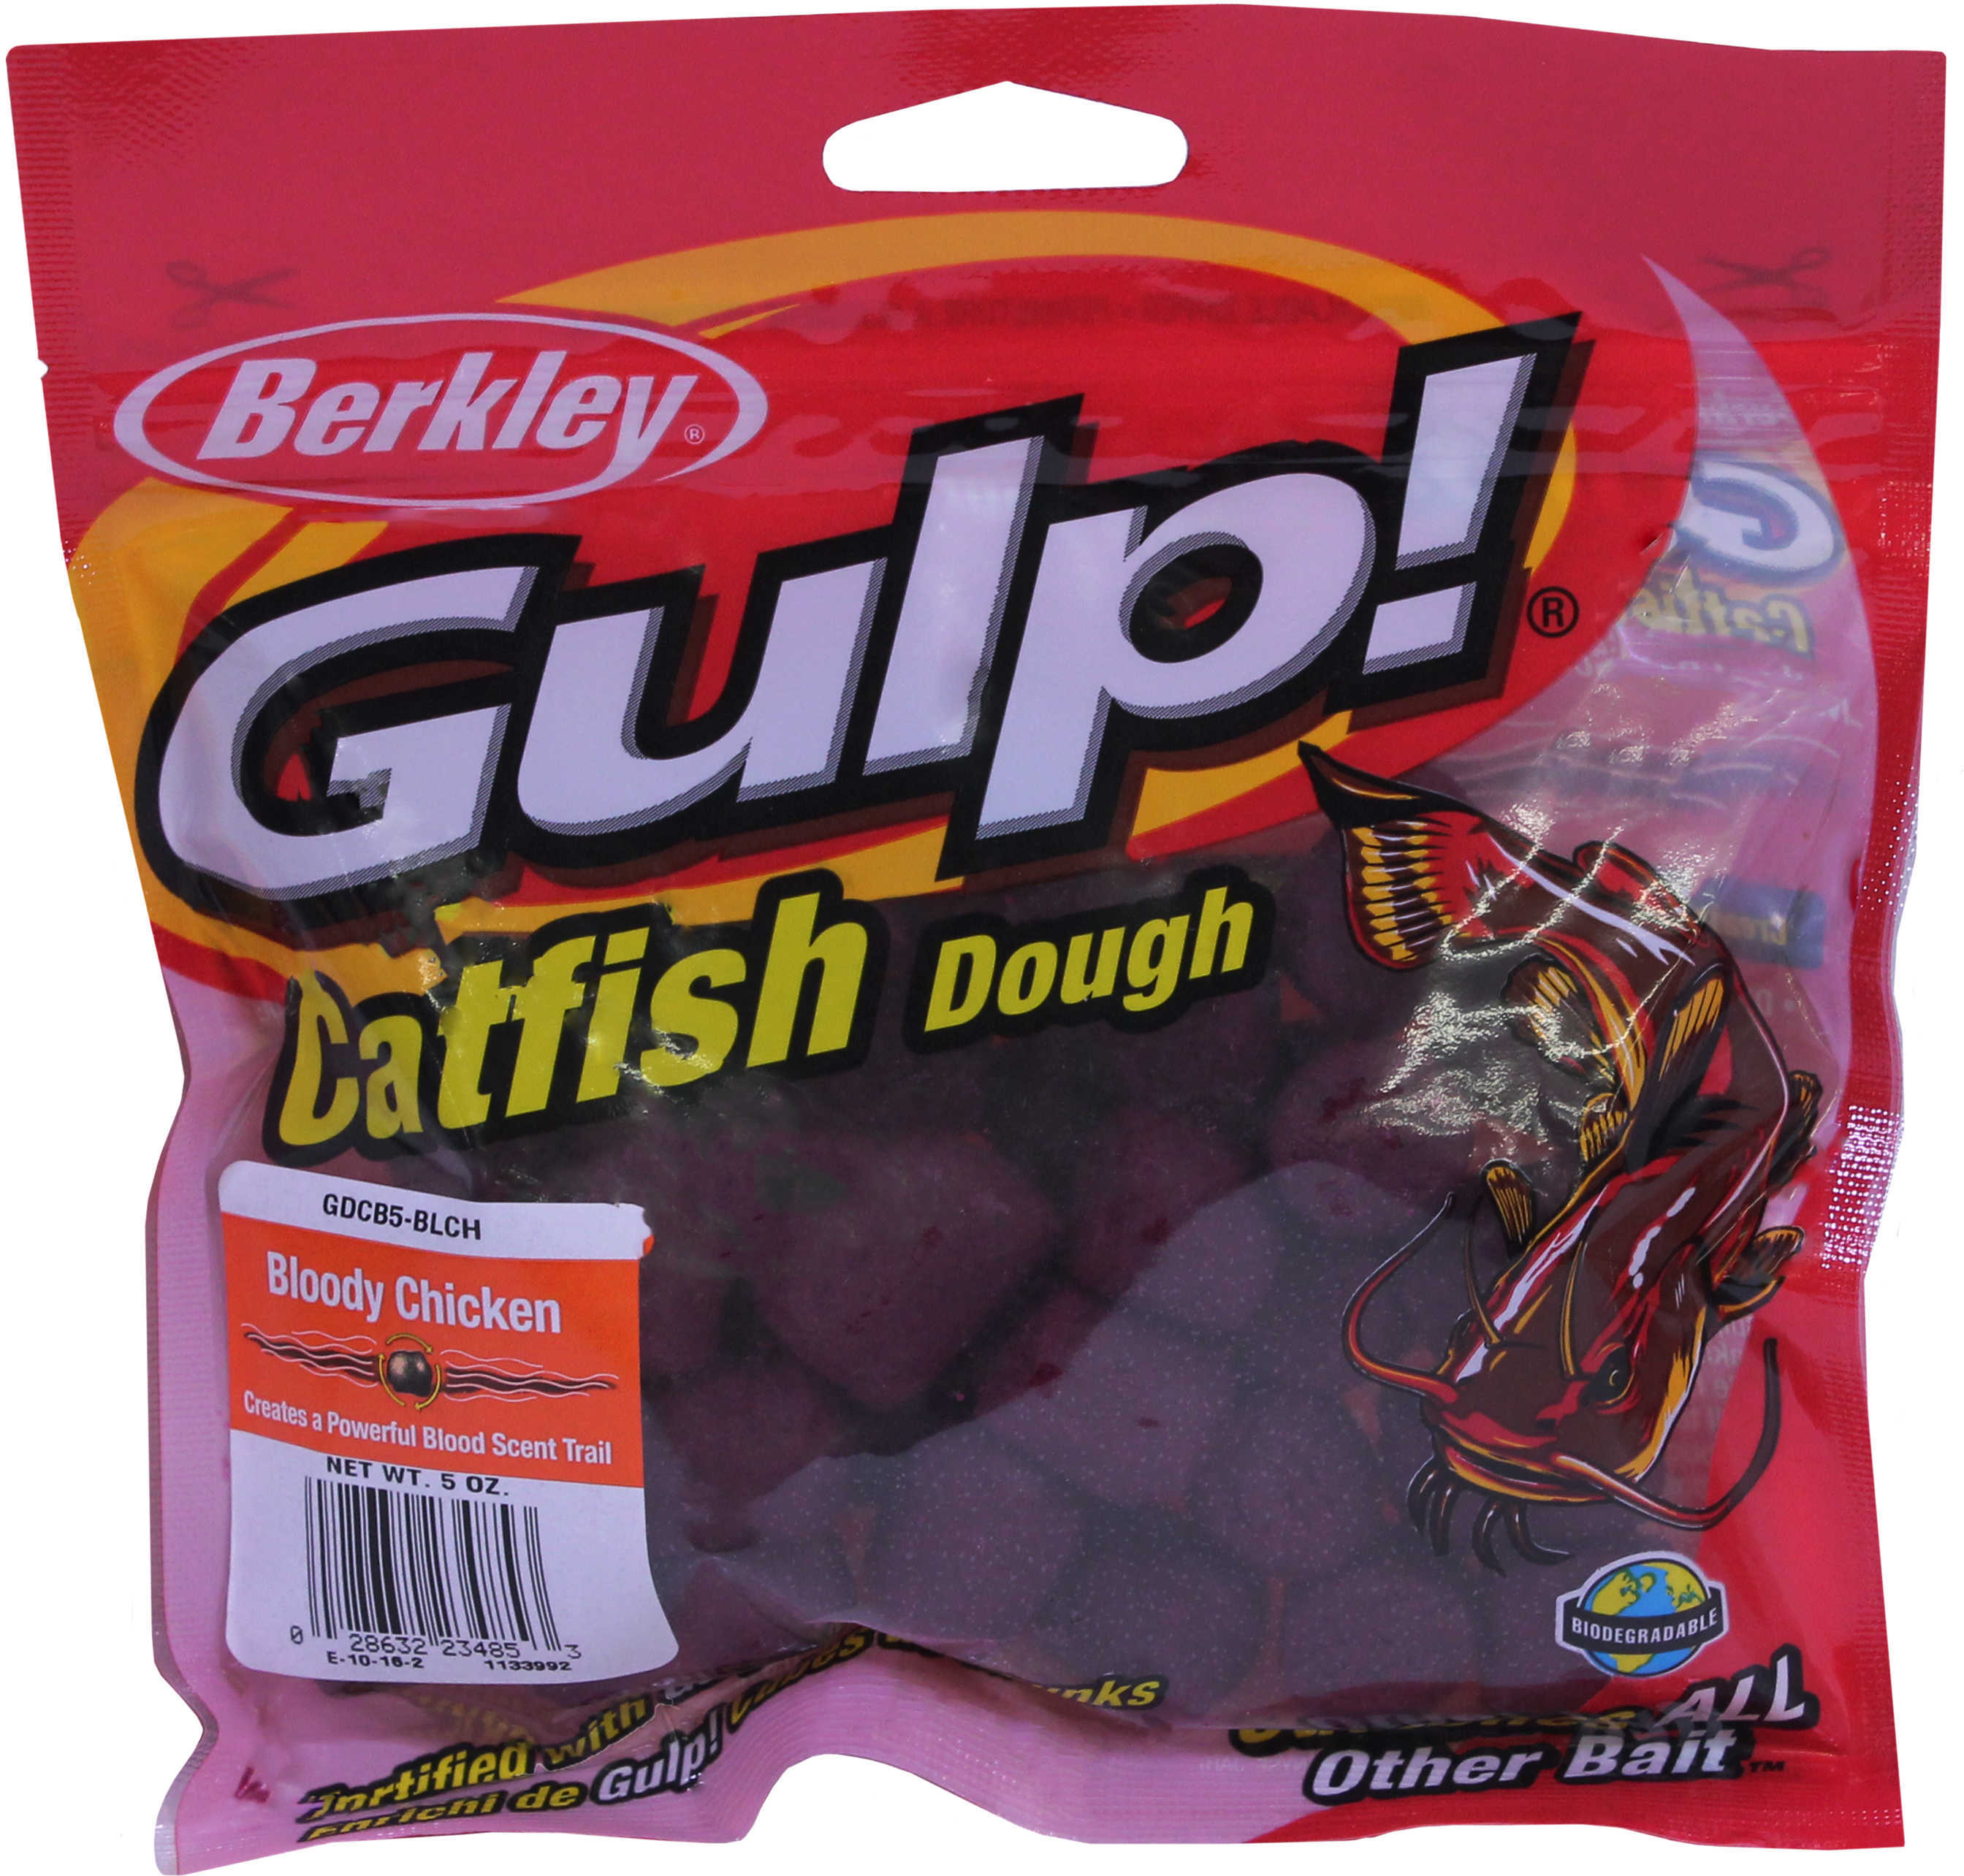 Berkley Gulp! Catfish Dough Chunk Style Blood Chicken Live Md#: GDCB5-BLCH